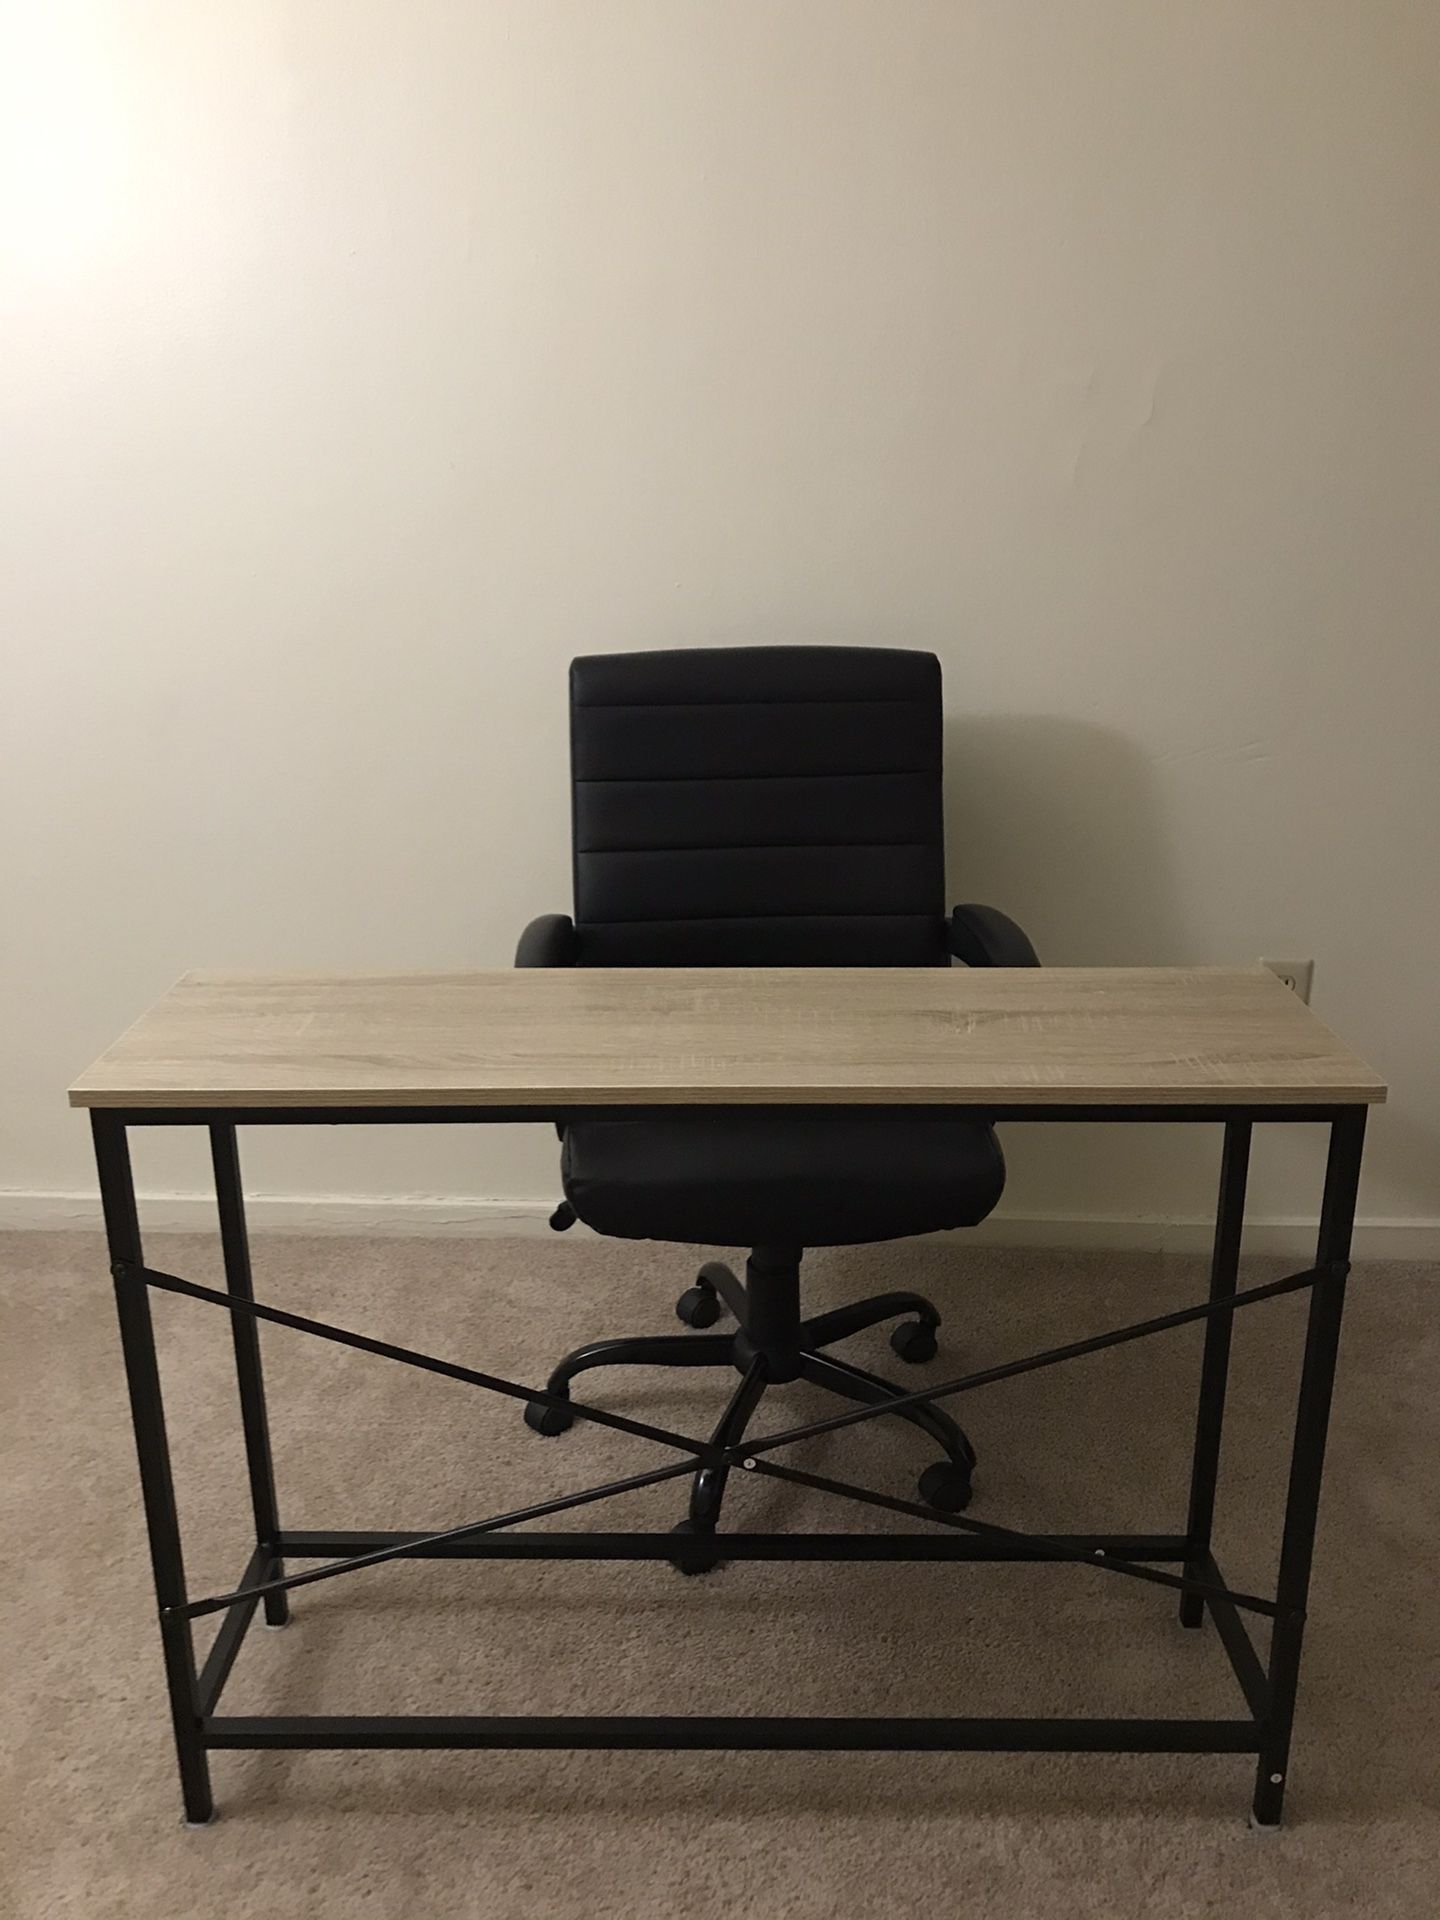 Desk+office chair